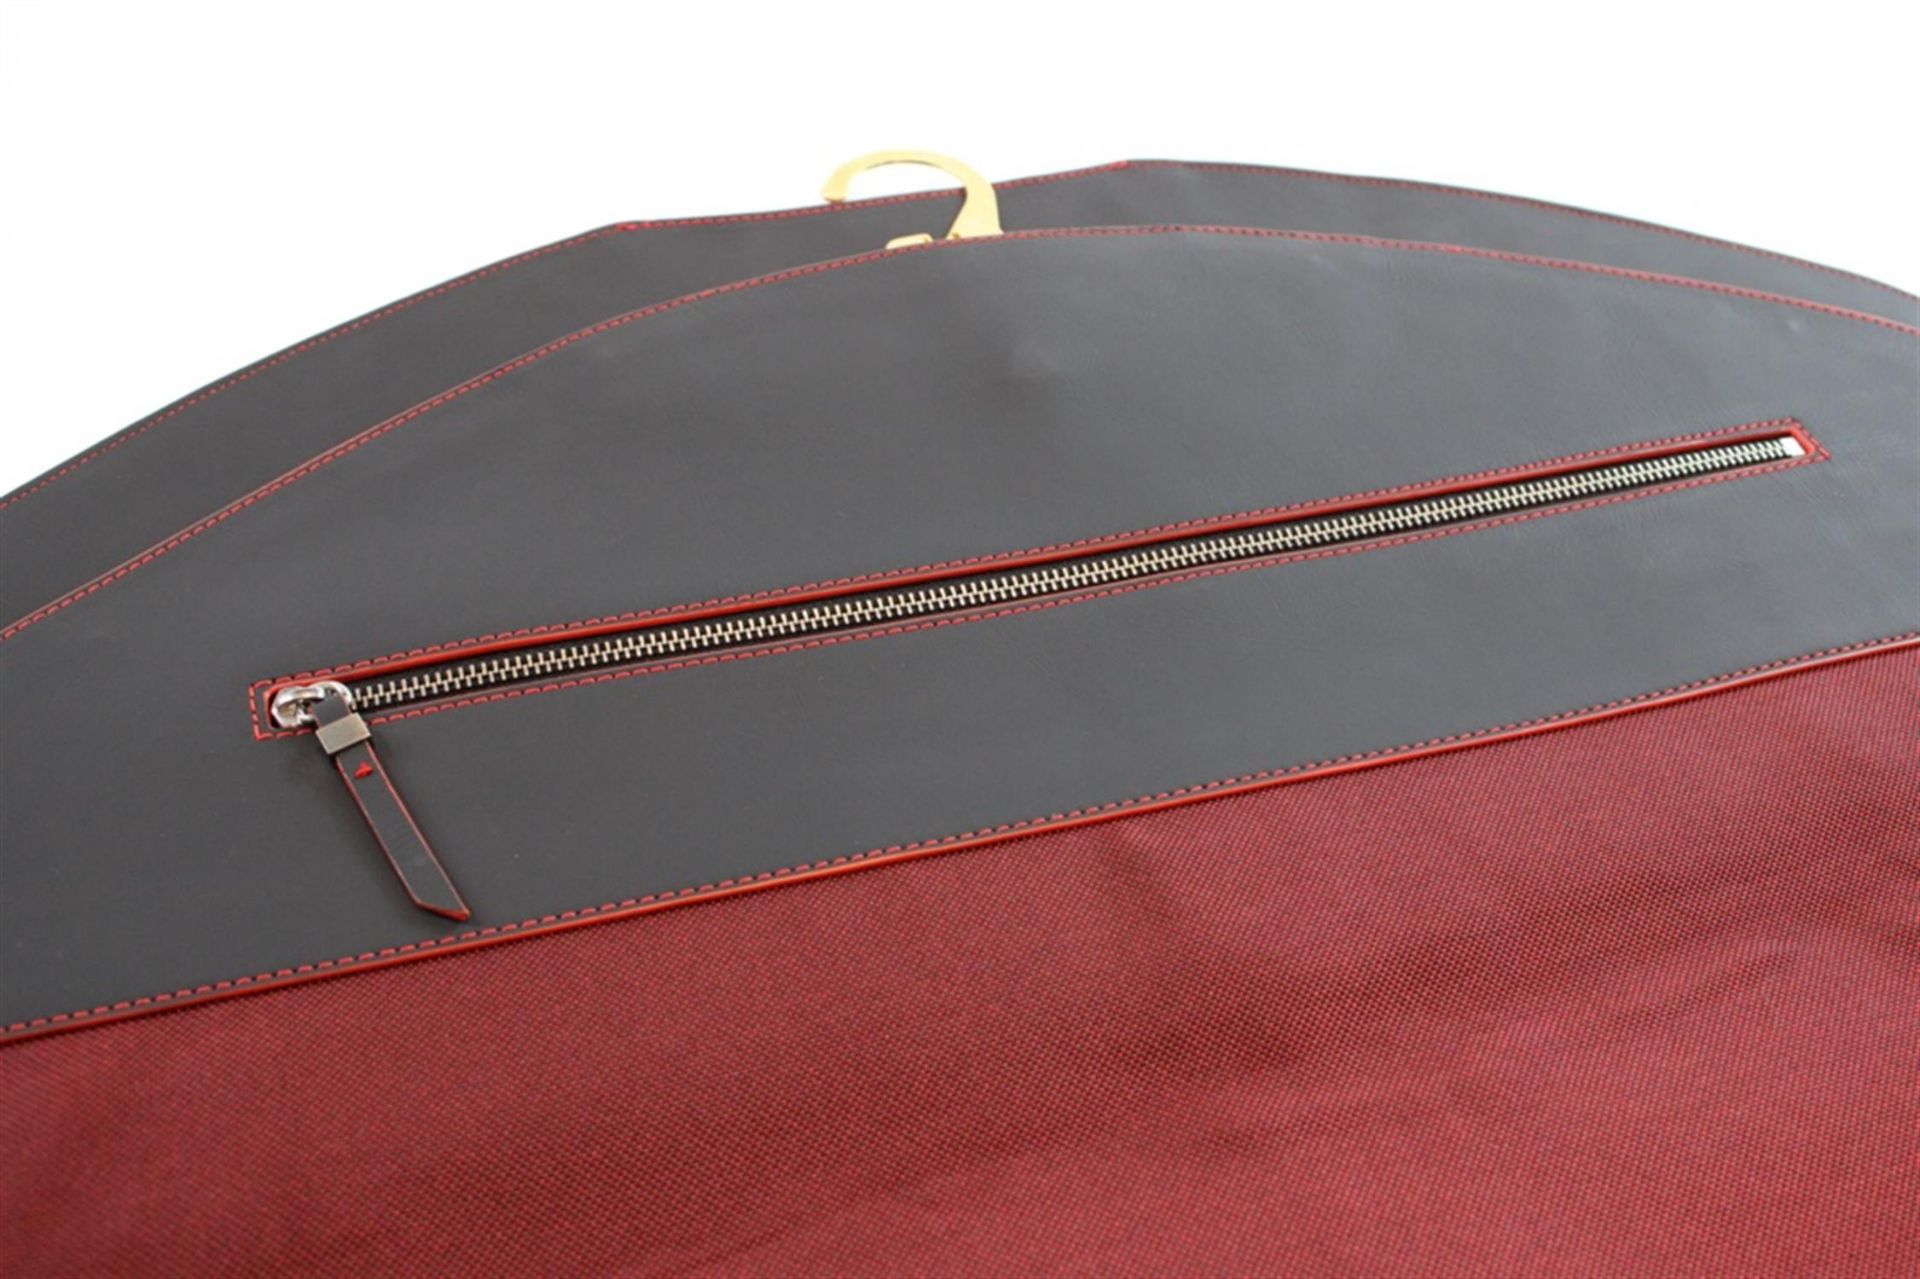 2017-2021 Ferrari 812 Superfast Luggage Bag Suit Carrier - Image 4 of 6